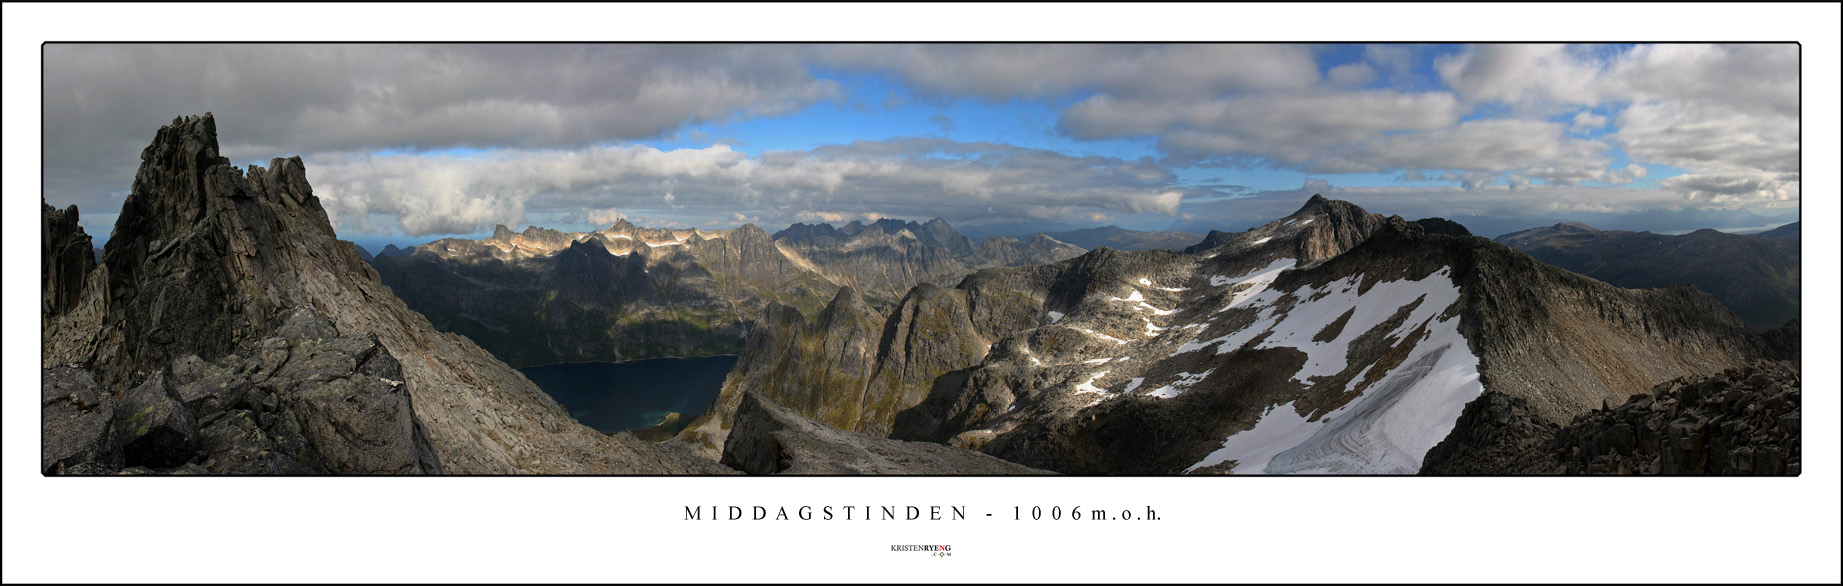 WEBMiddagstinden3.jpg - Utsikt fra Middagstinden. Her over Ersfjorden og Ersfjordtraversen bak. Til høyre i bildet ses Skitntinden.